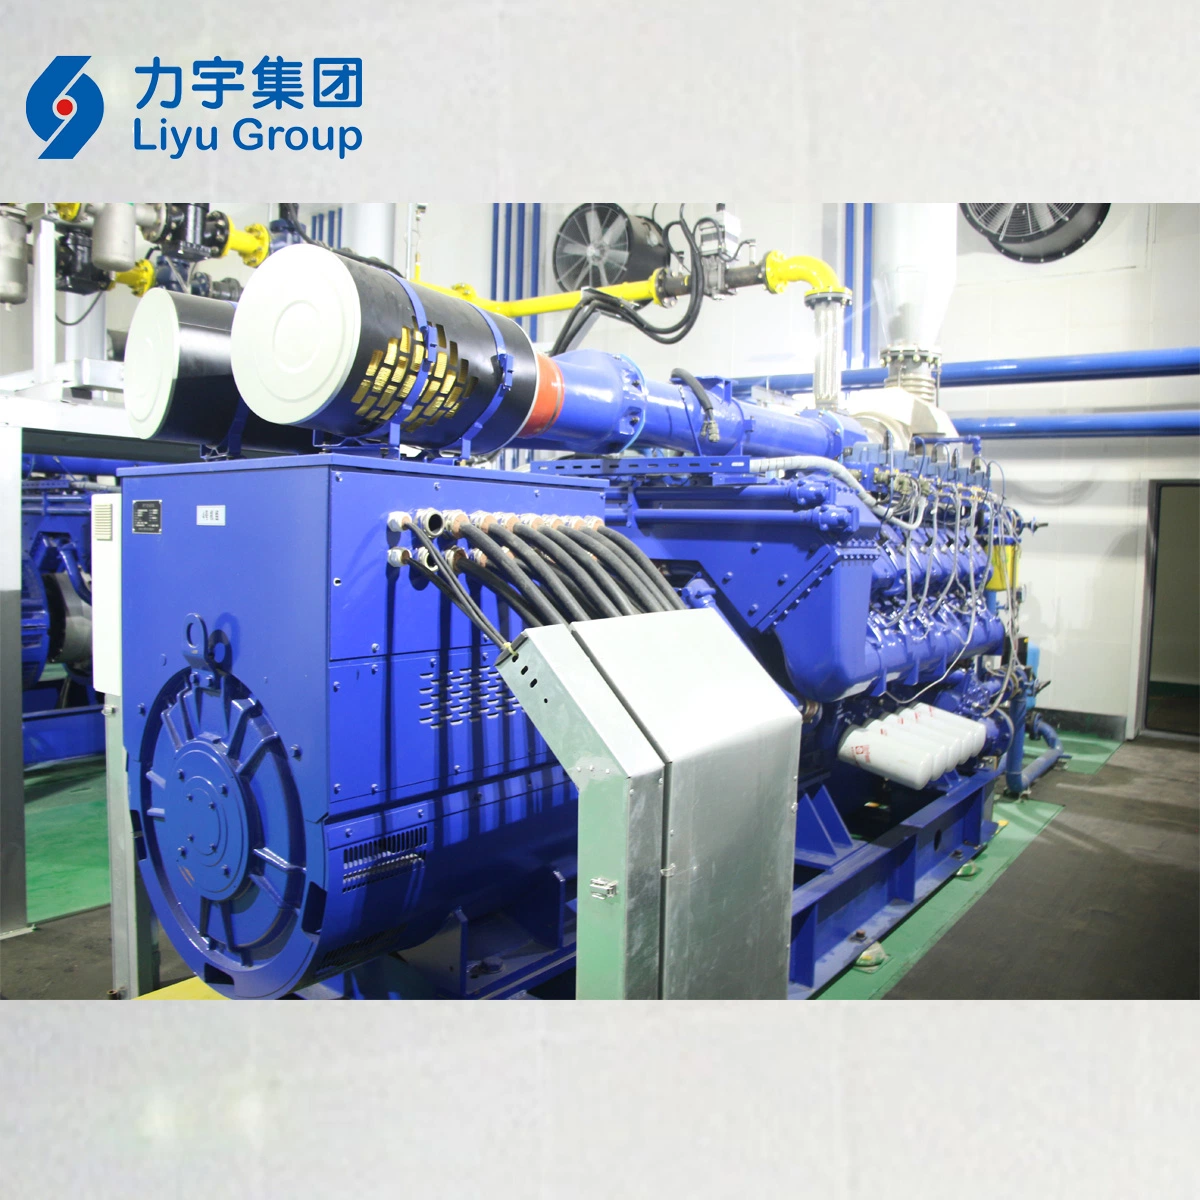 China Liyu 0.8MW/800kw High Voltage Gas-Fired Internal Combustion Engine Energy Saving Biomass Gas Powerd Generator Set Manufacturer